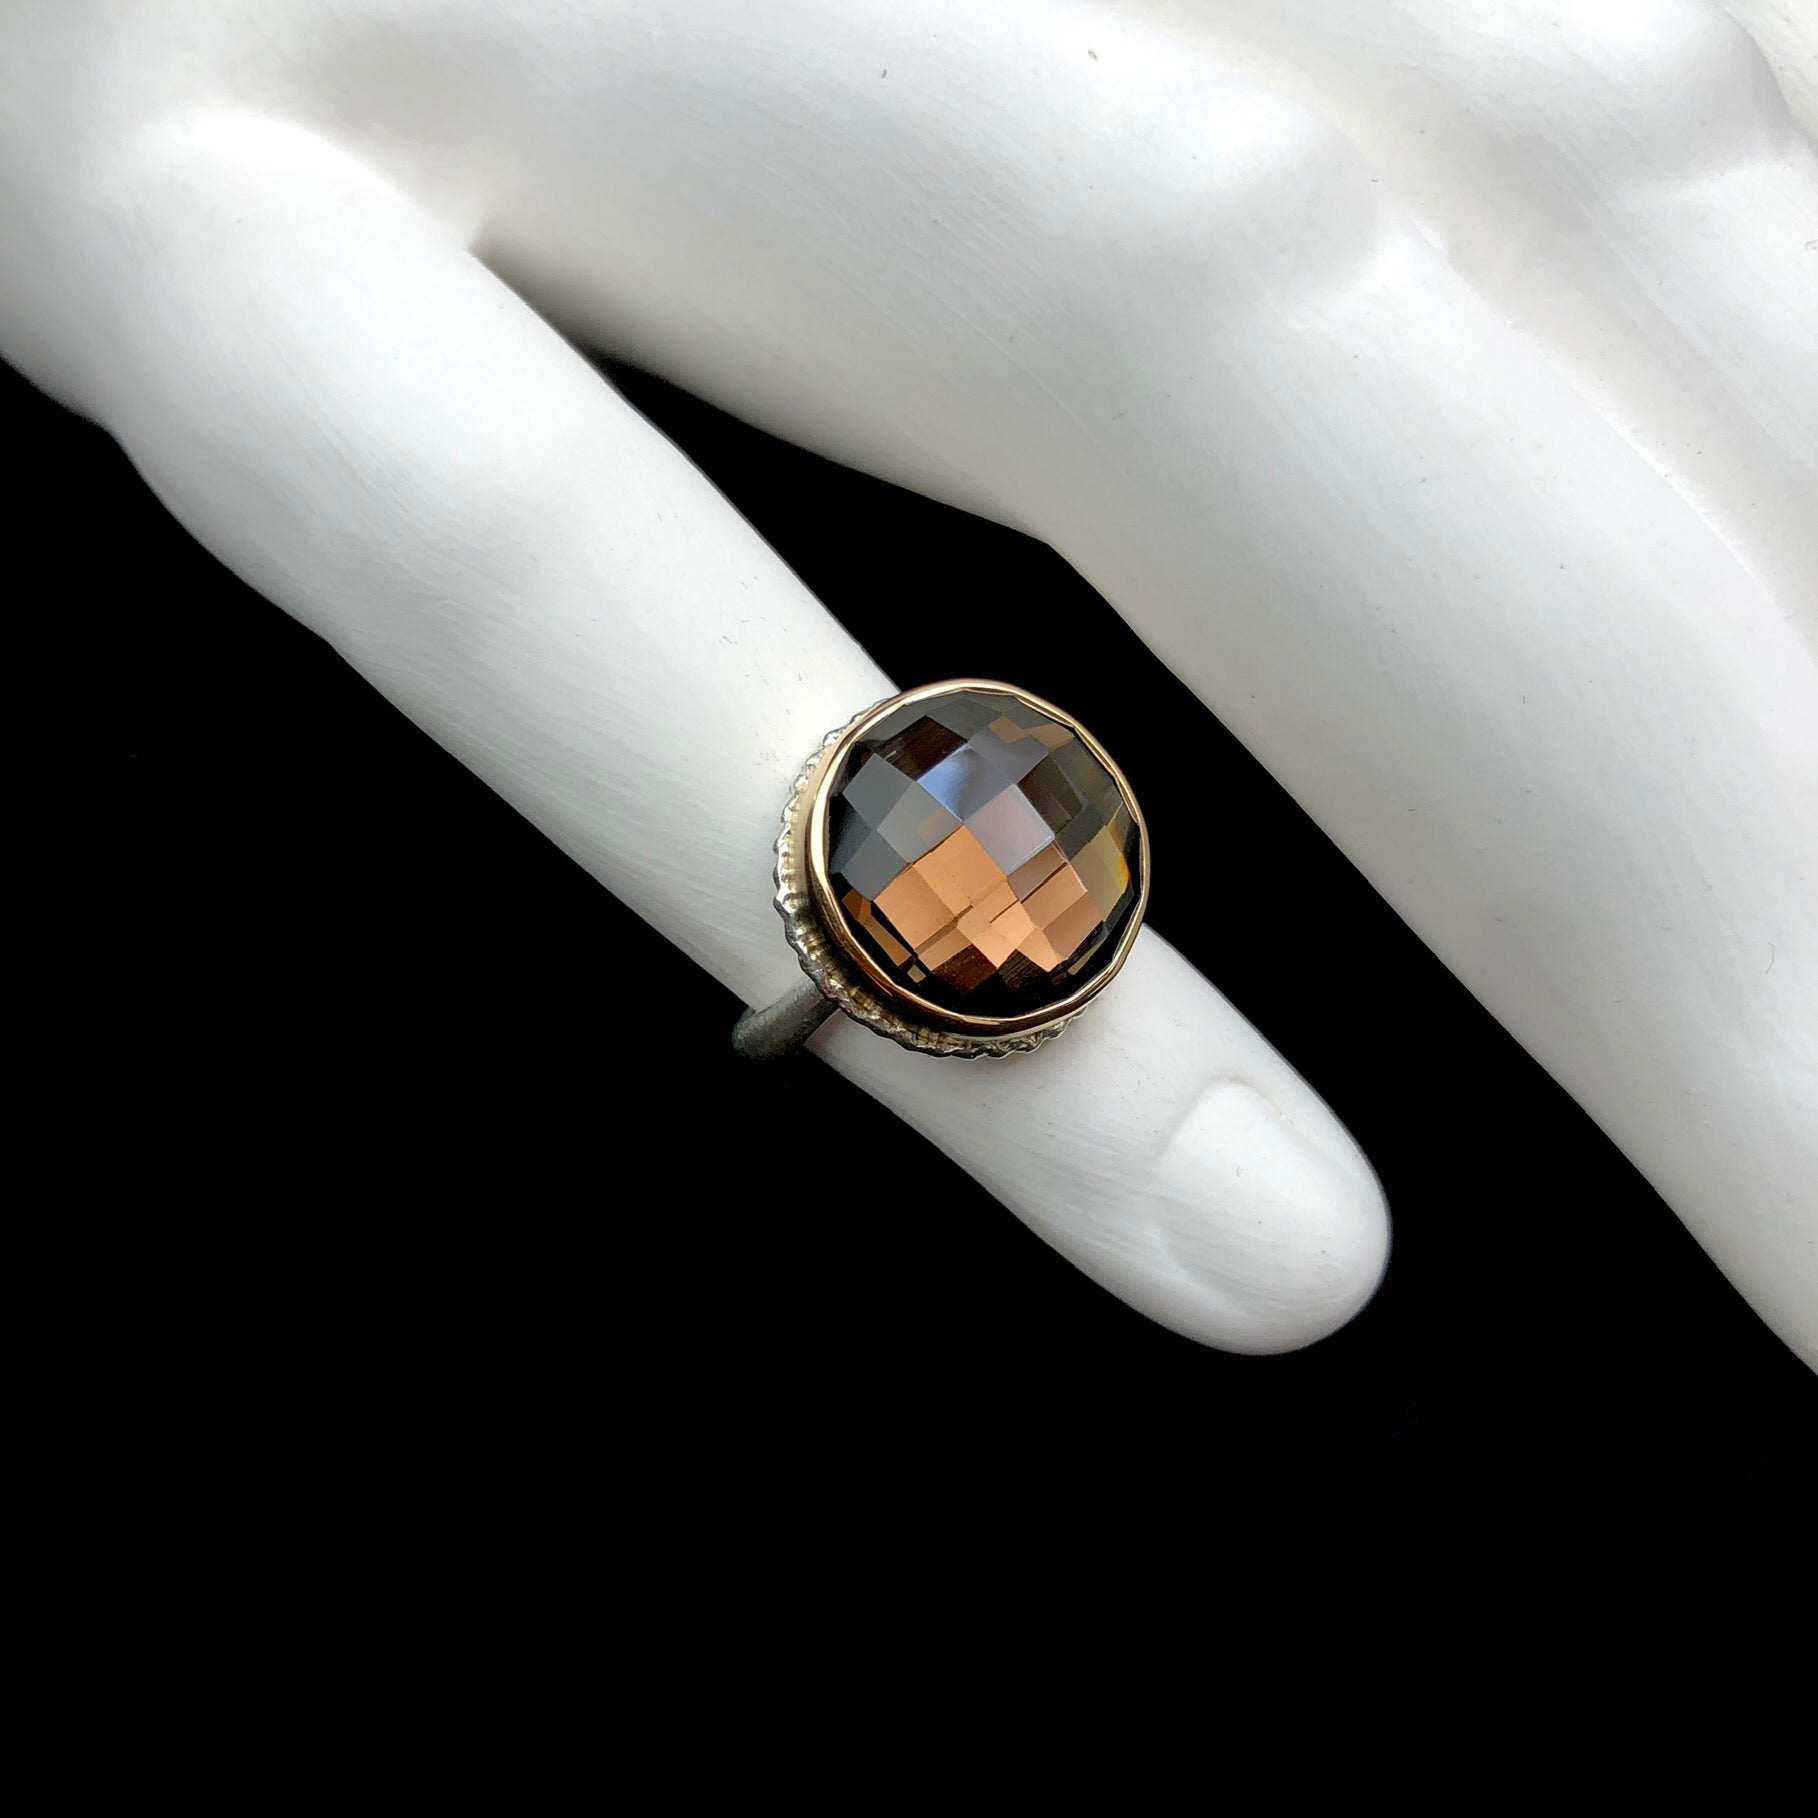 Round smokey quartz ring shown on white ceramic finger